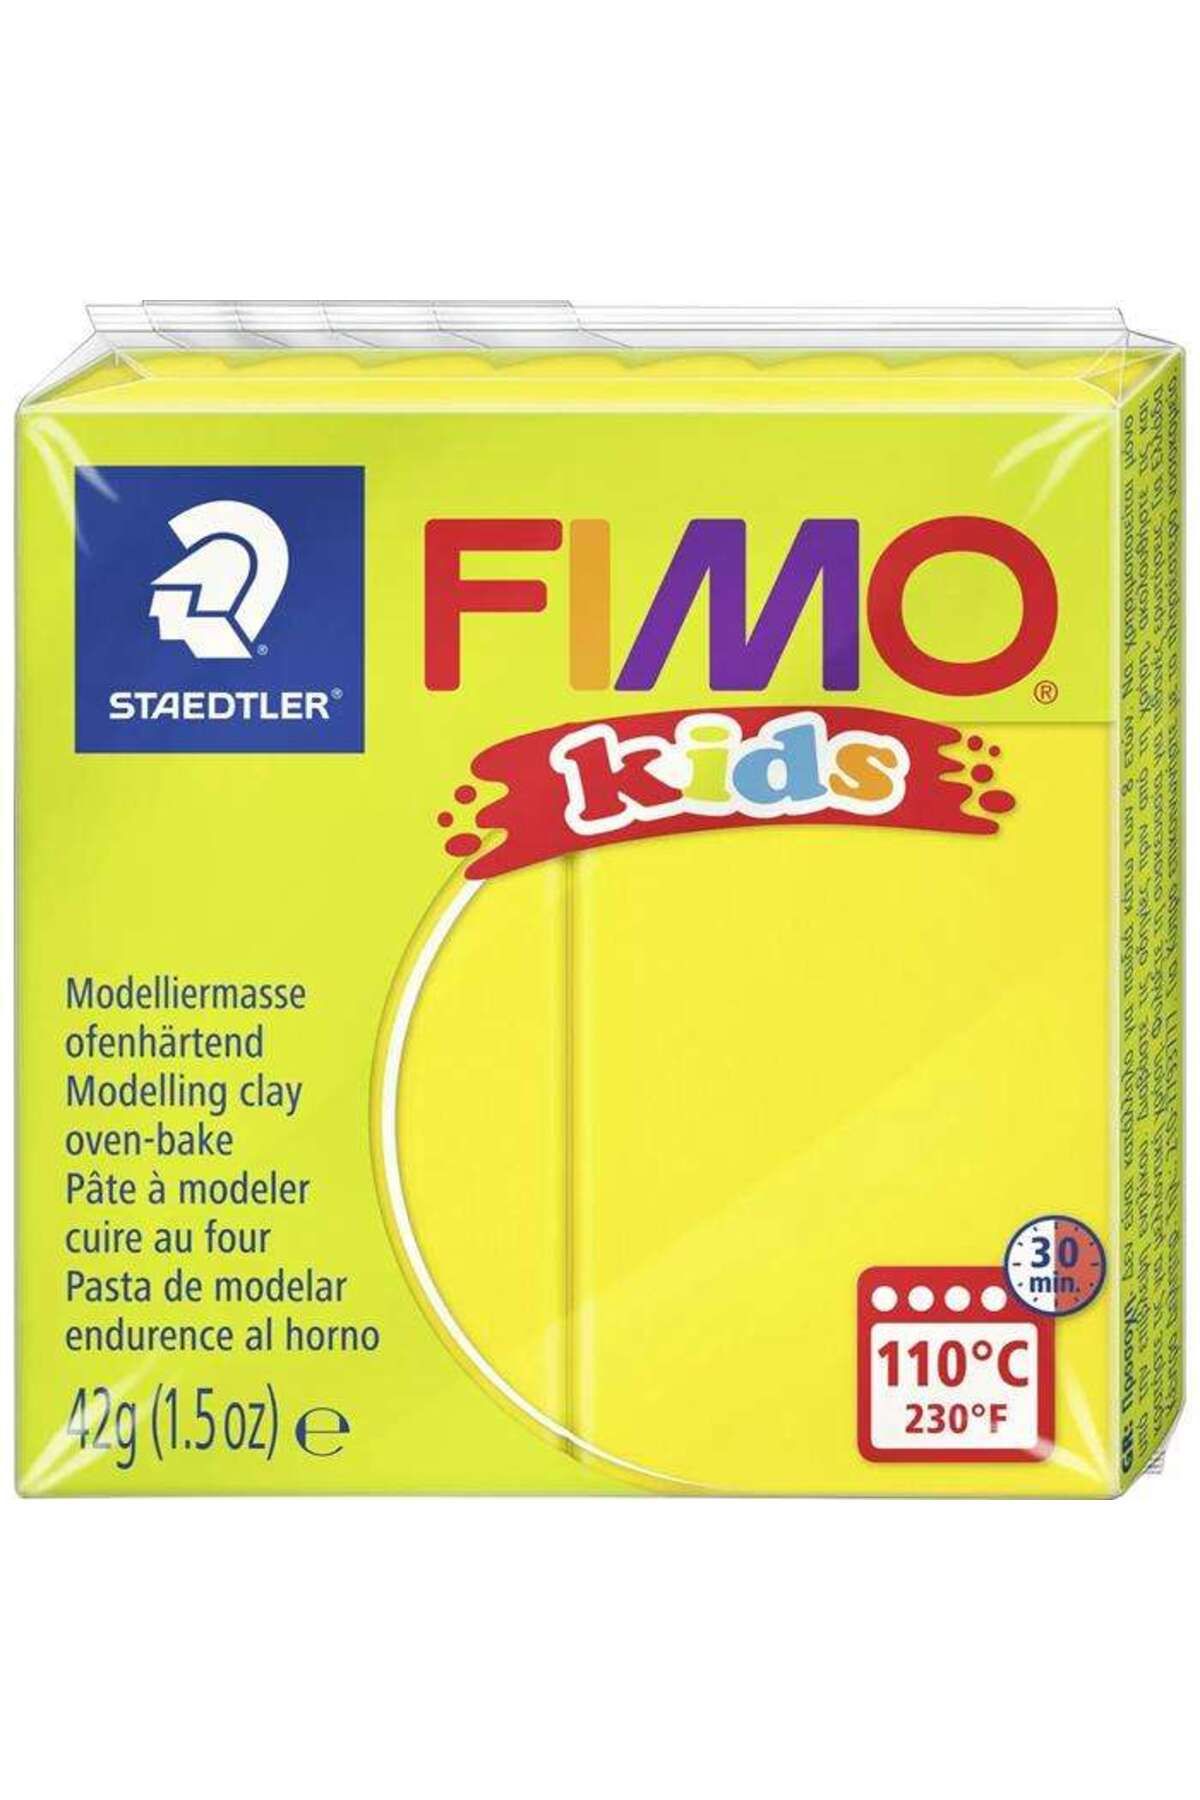 Staedtler Fimo Kids Modelleme Kili 42 g Yellow 1